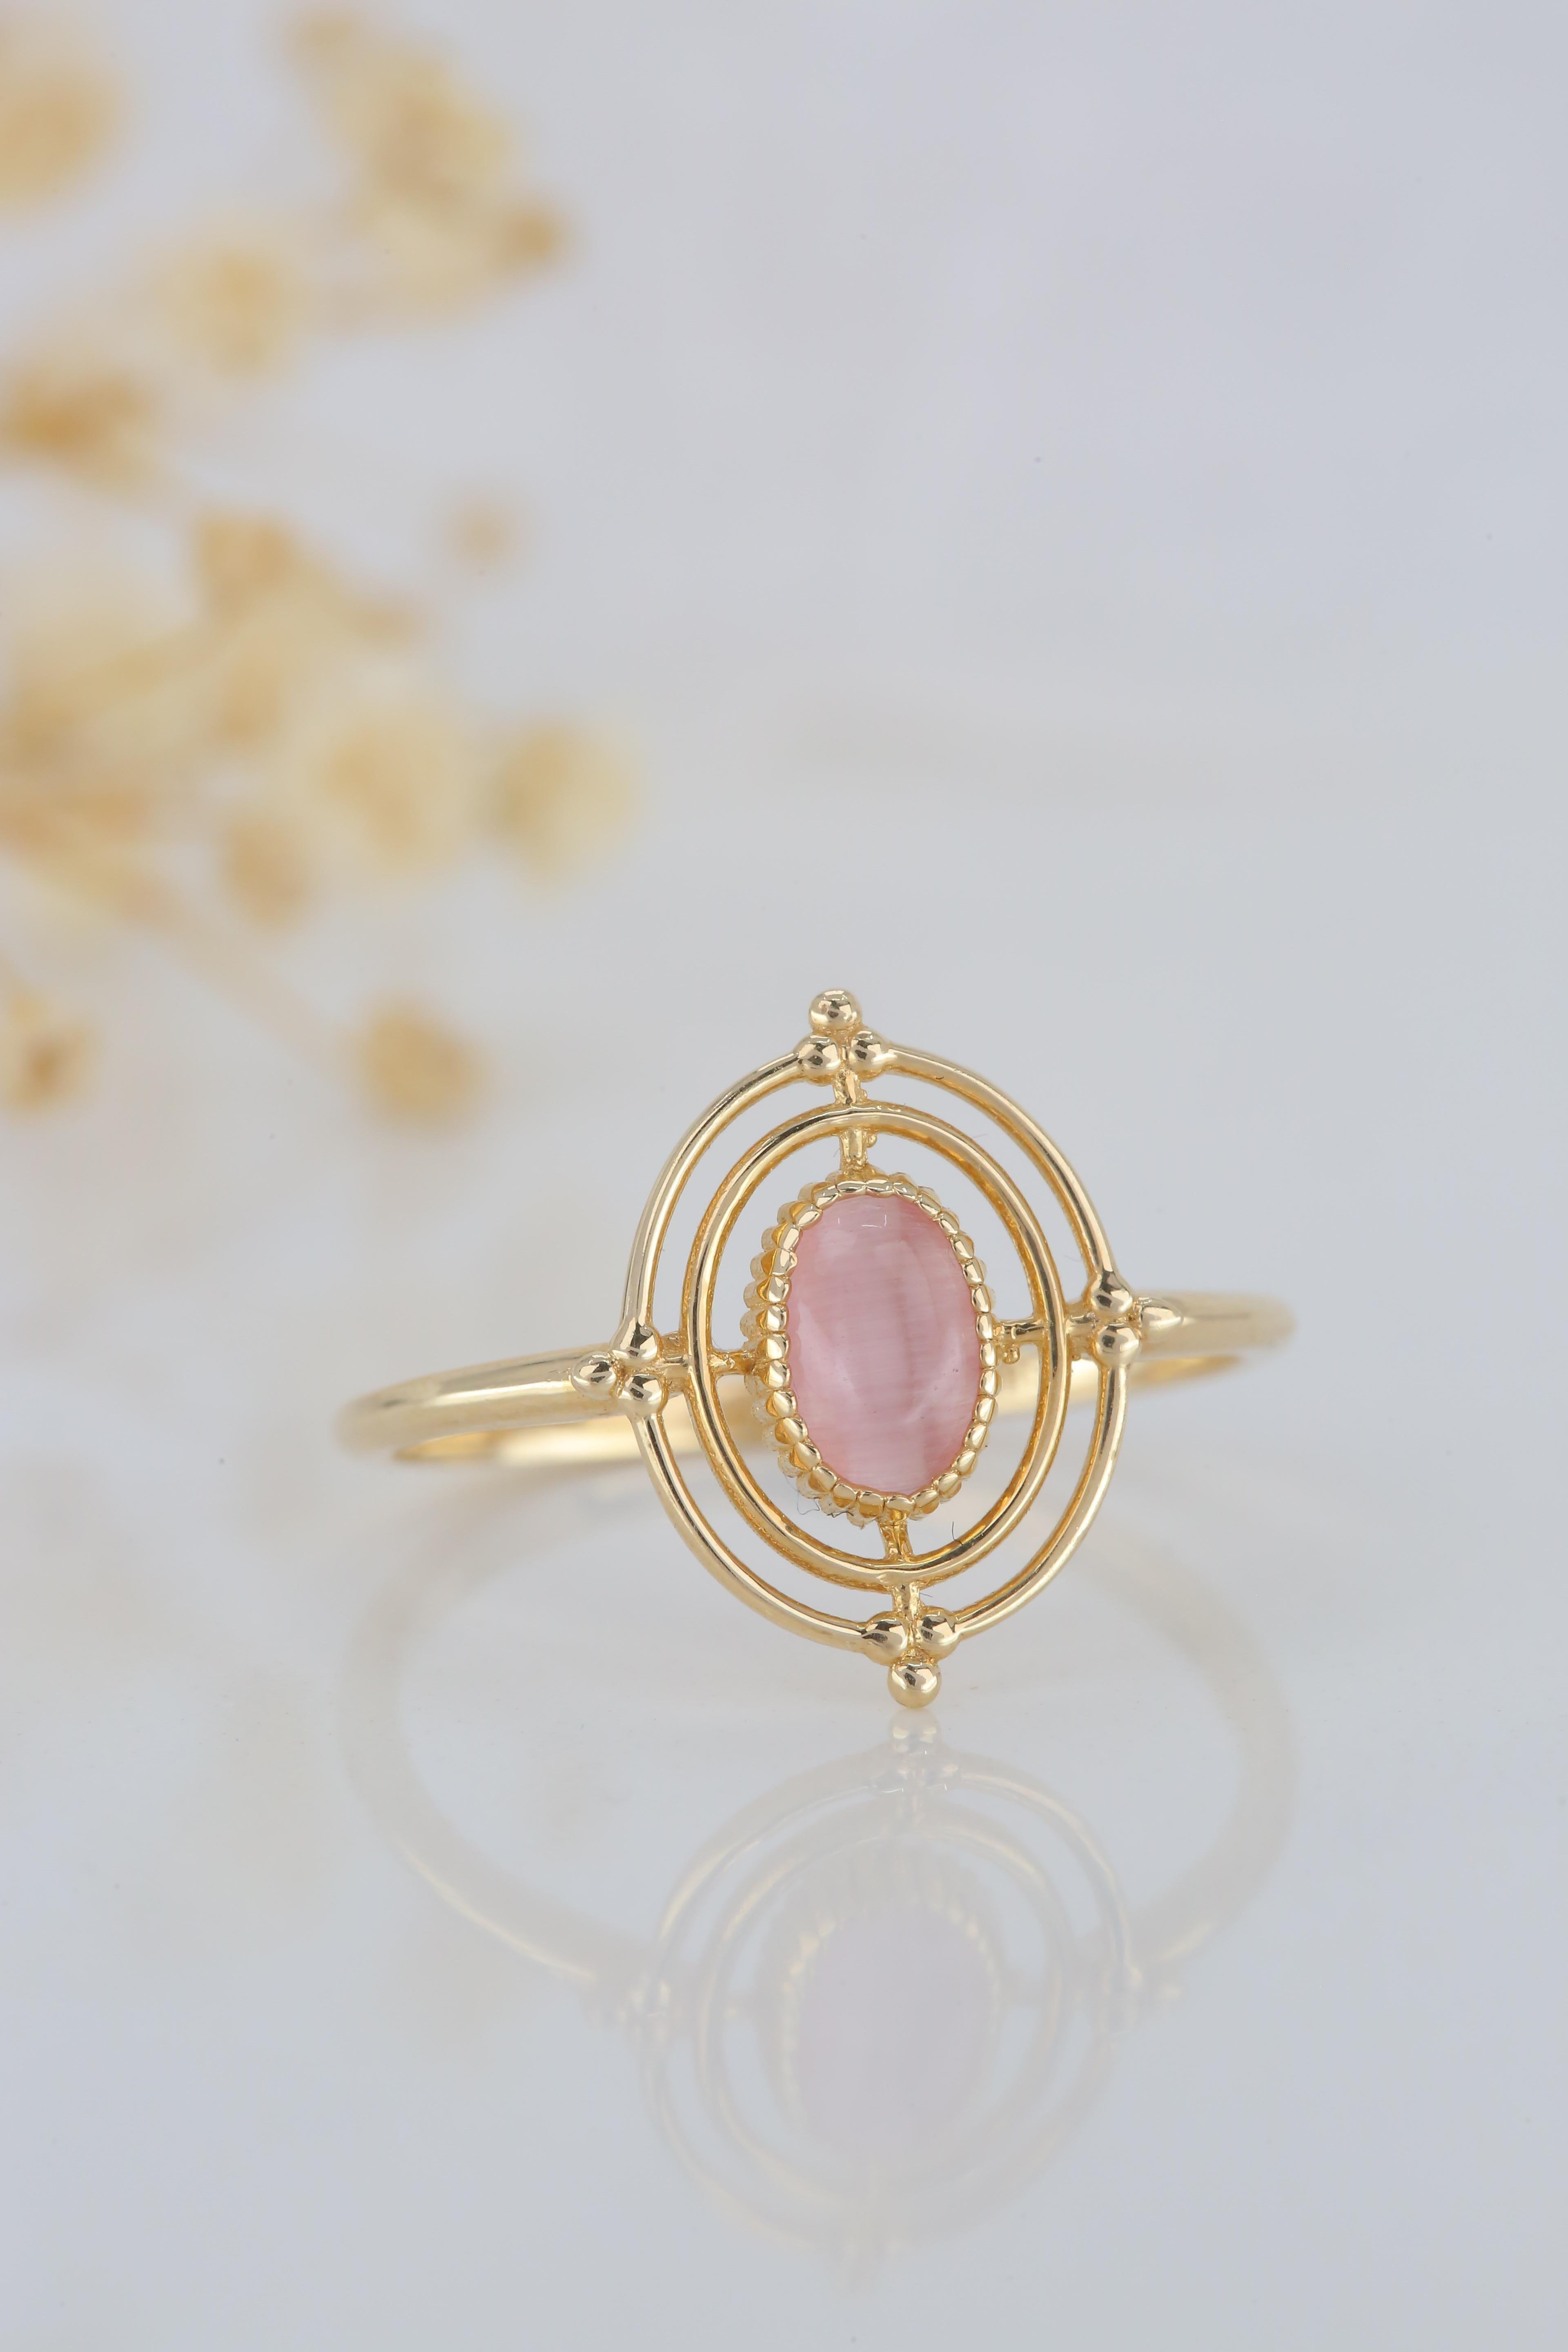 For Sale:  14K Gold Vintage Style Oval Cut Pink Quartz Ring 9